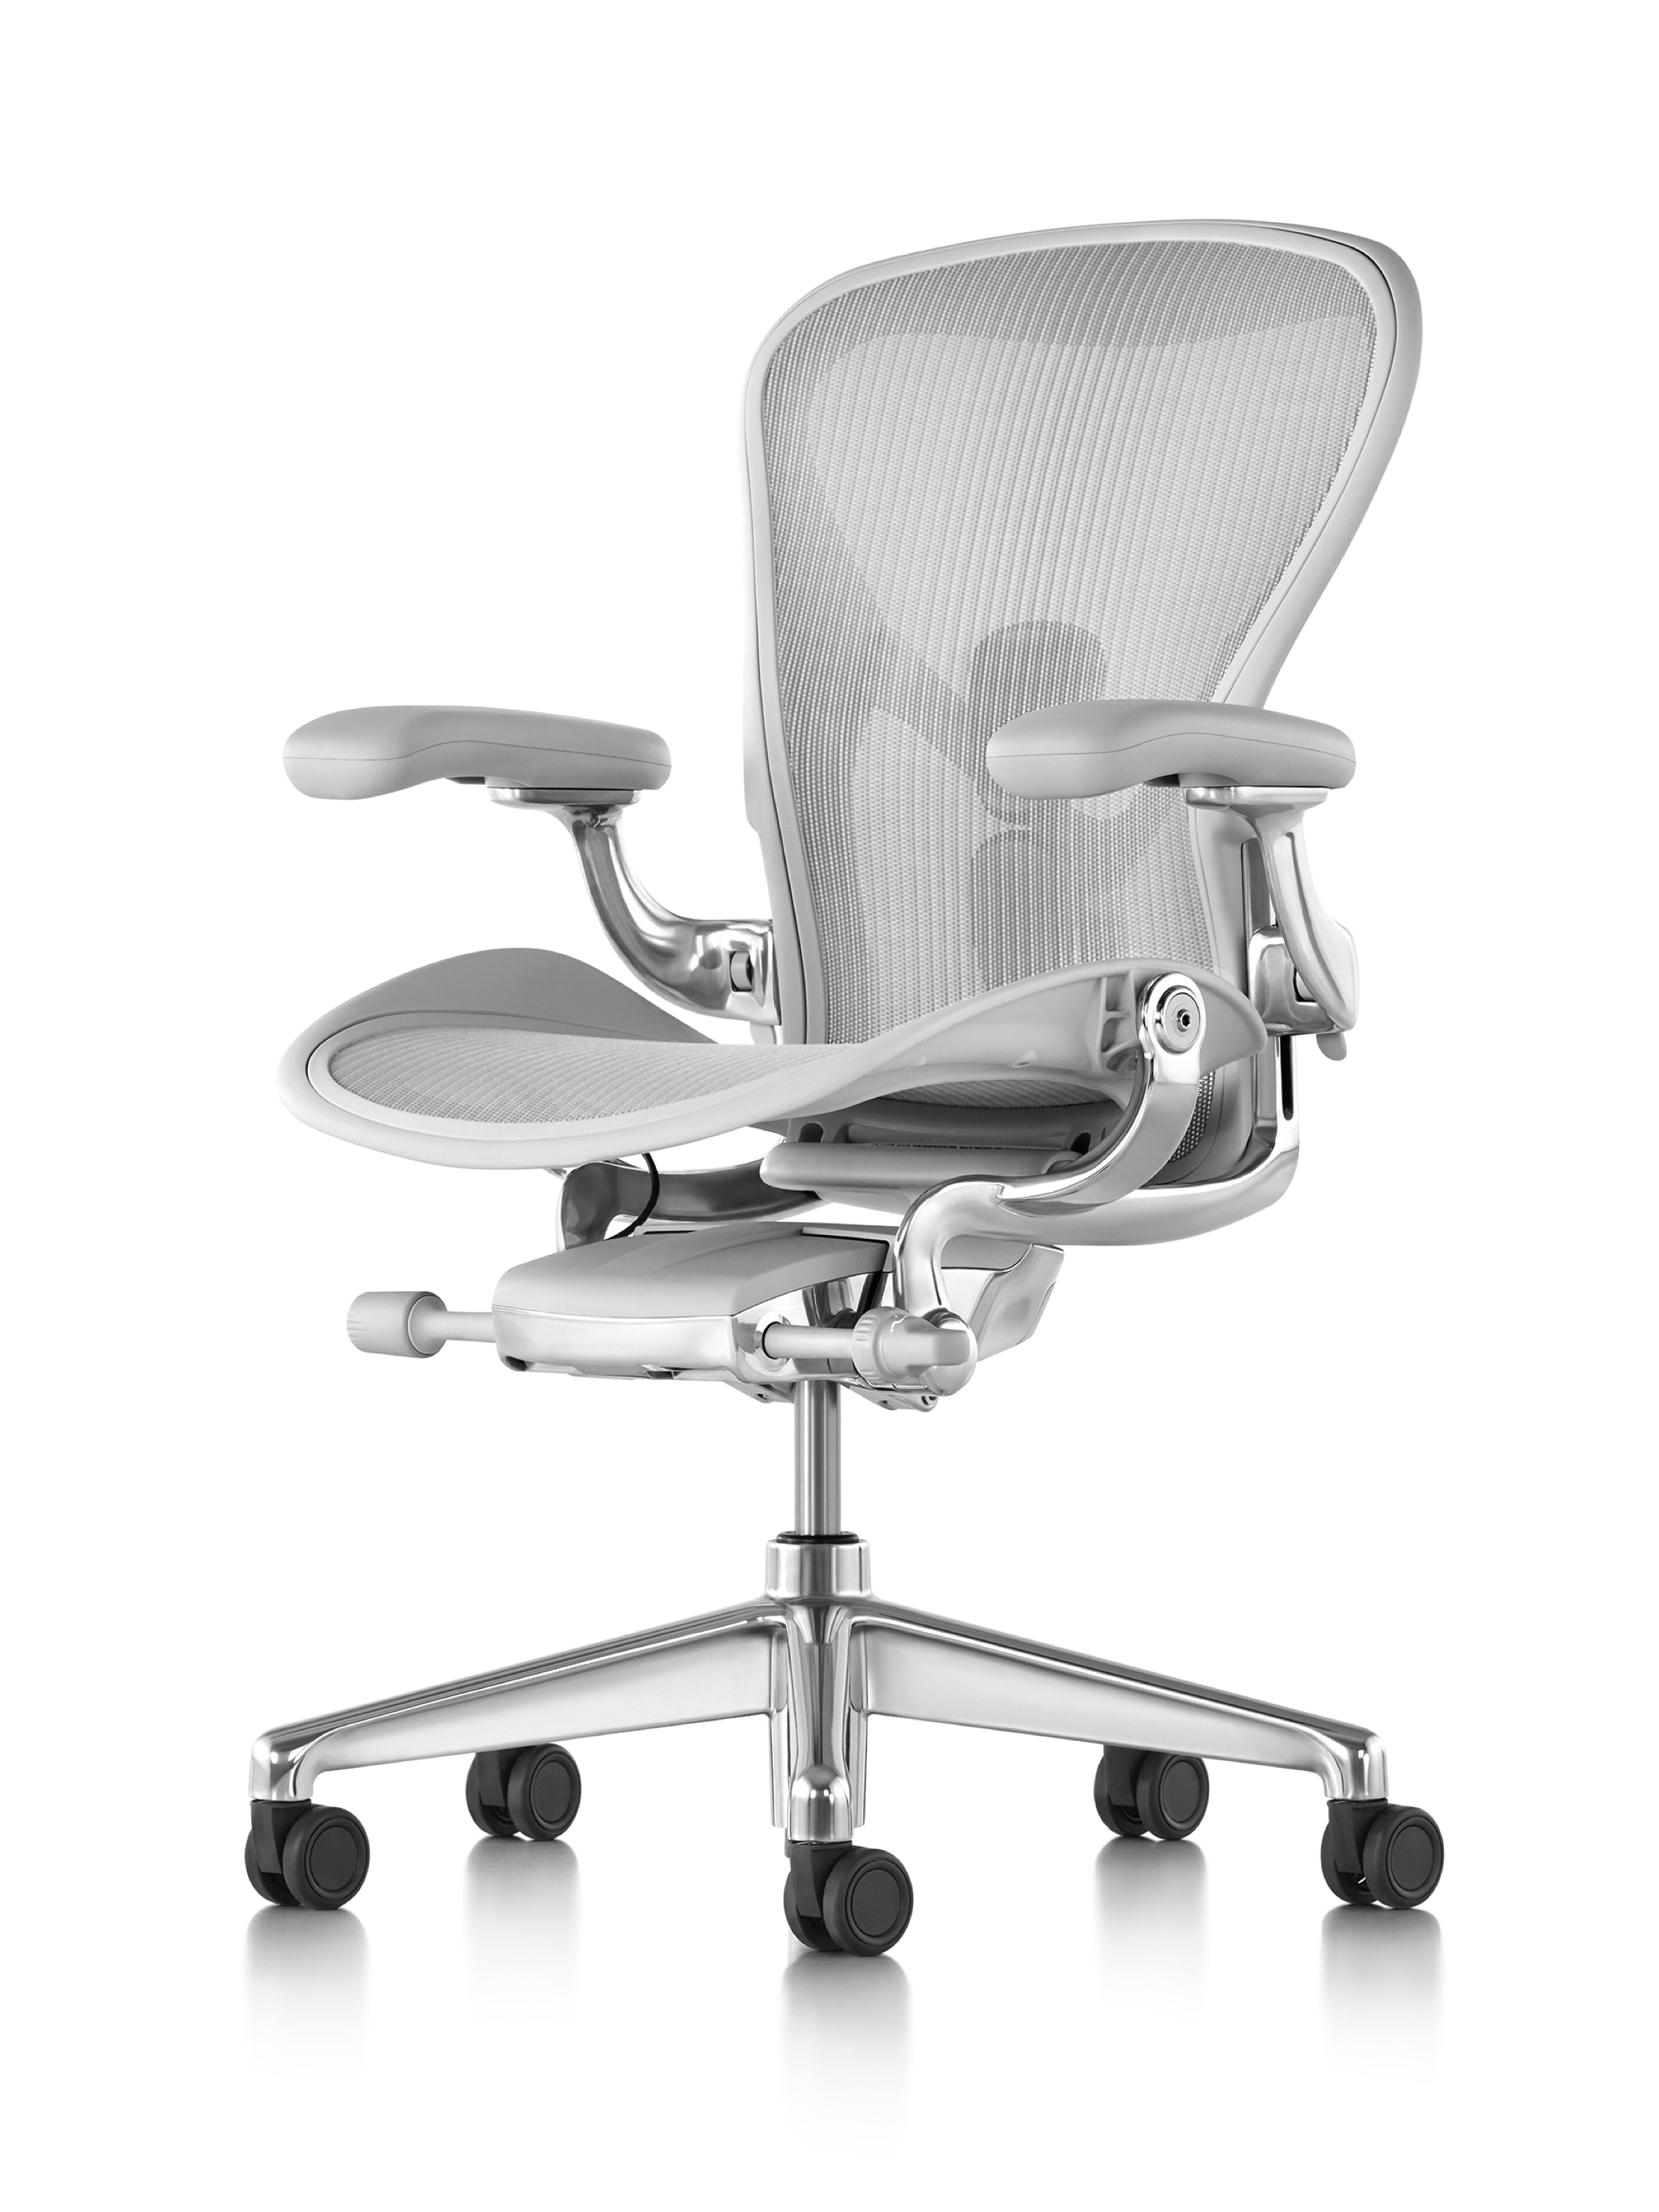 Herman Miller Aeron Chair Sizes A B C Aeron Chair Herman Miller